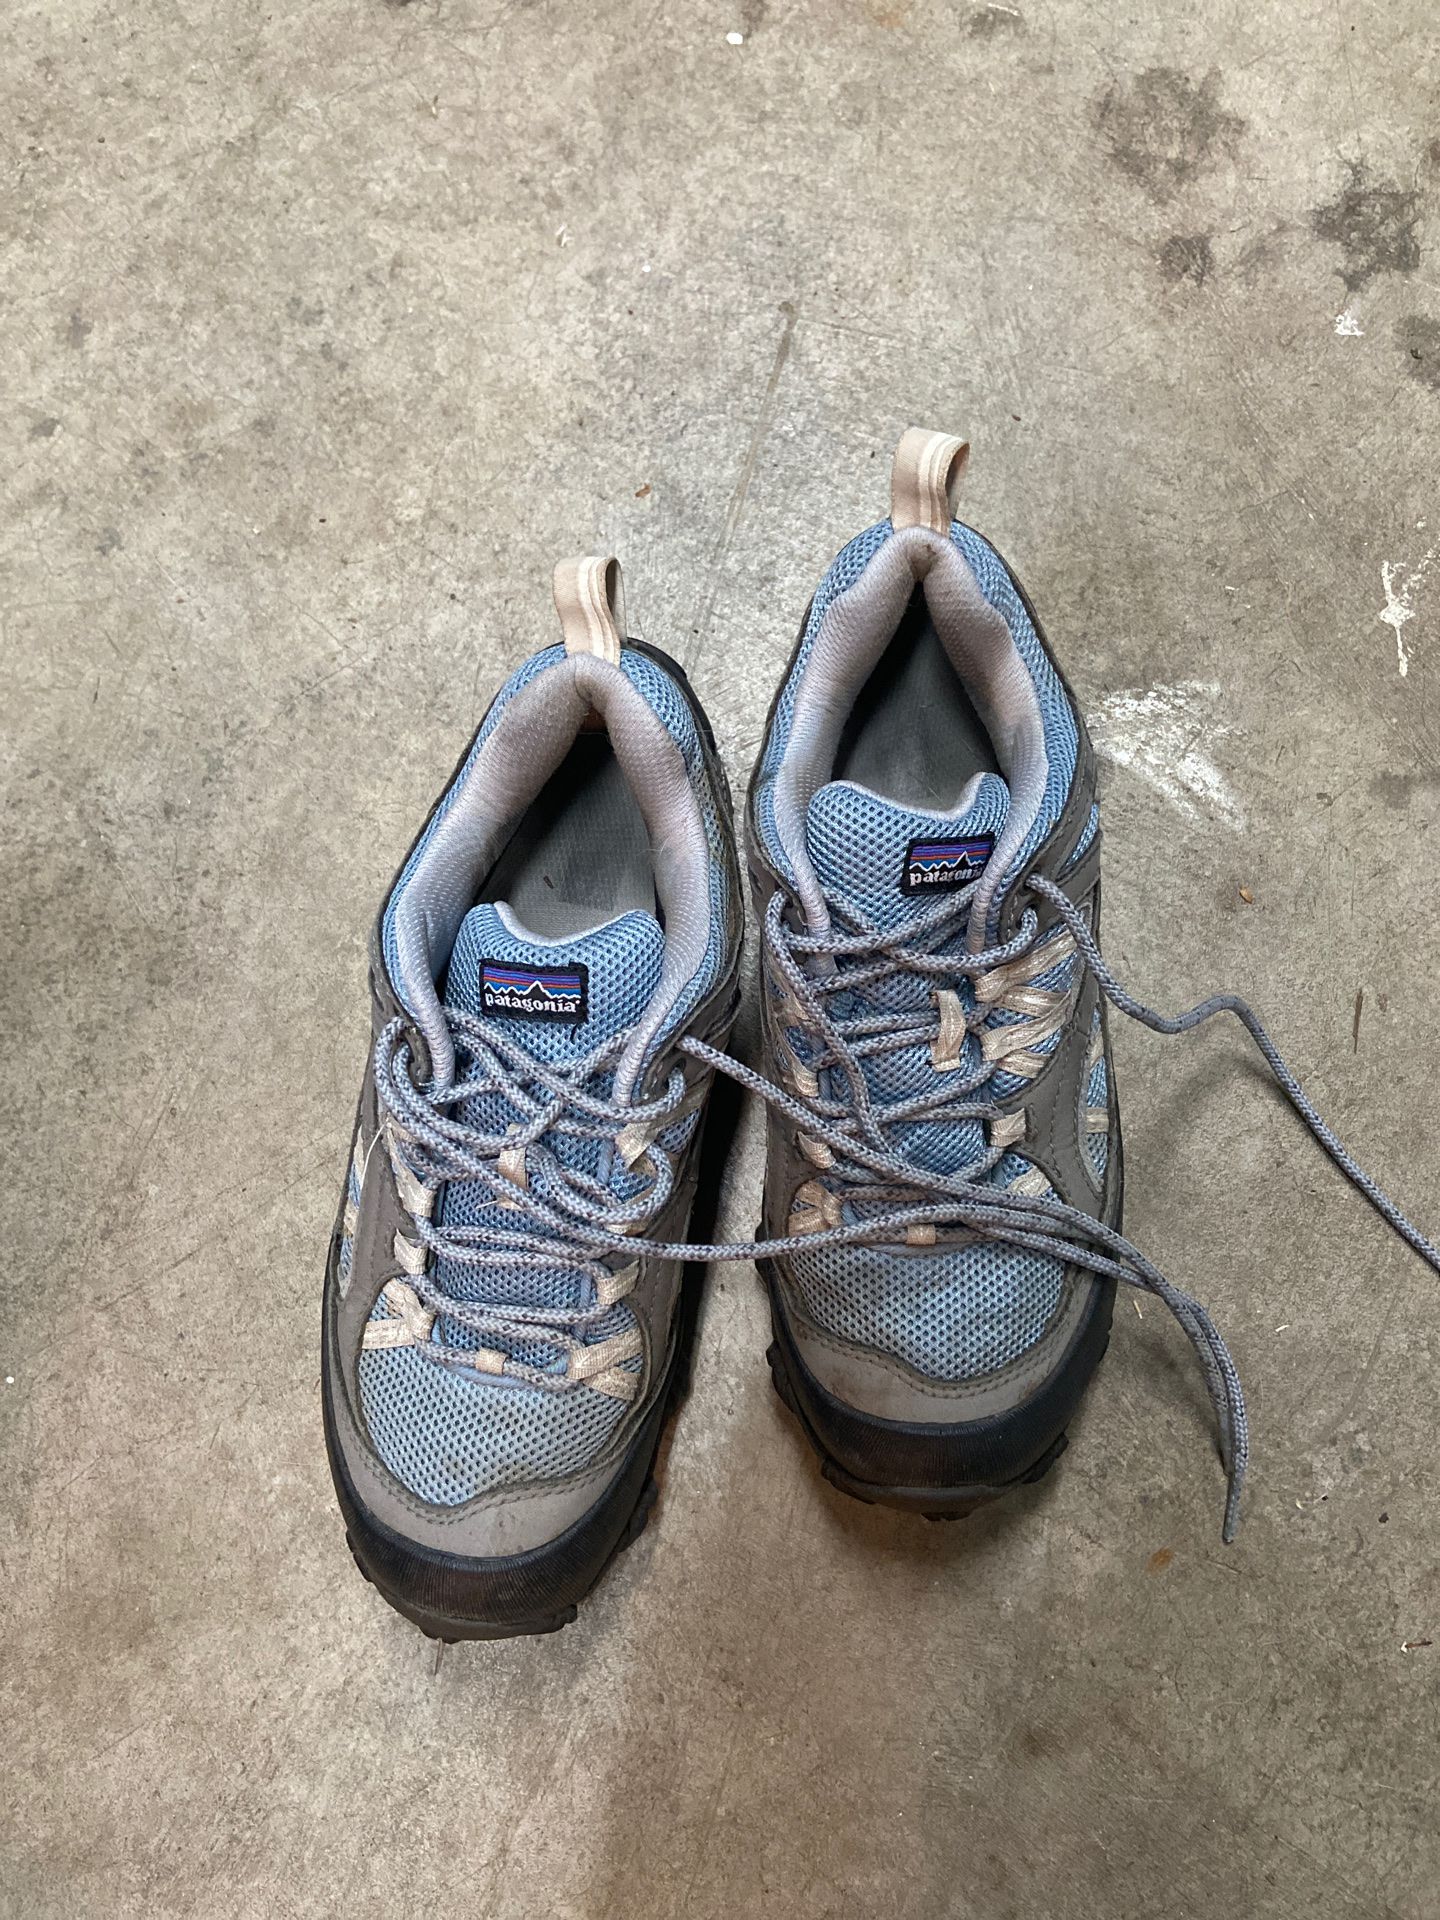 Women’s Patagonia hiking shoes